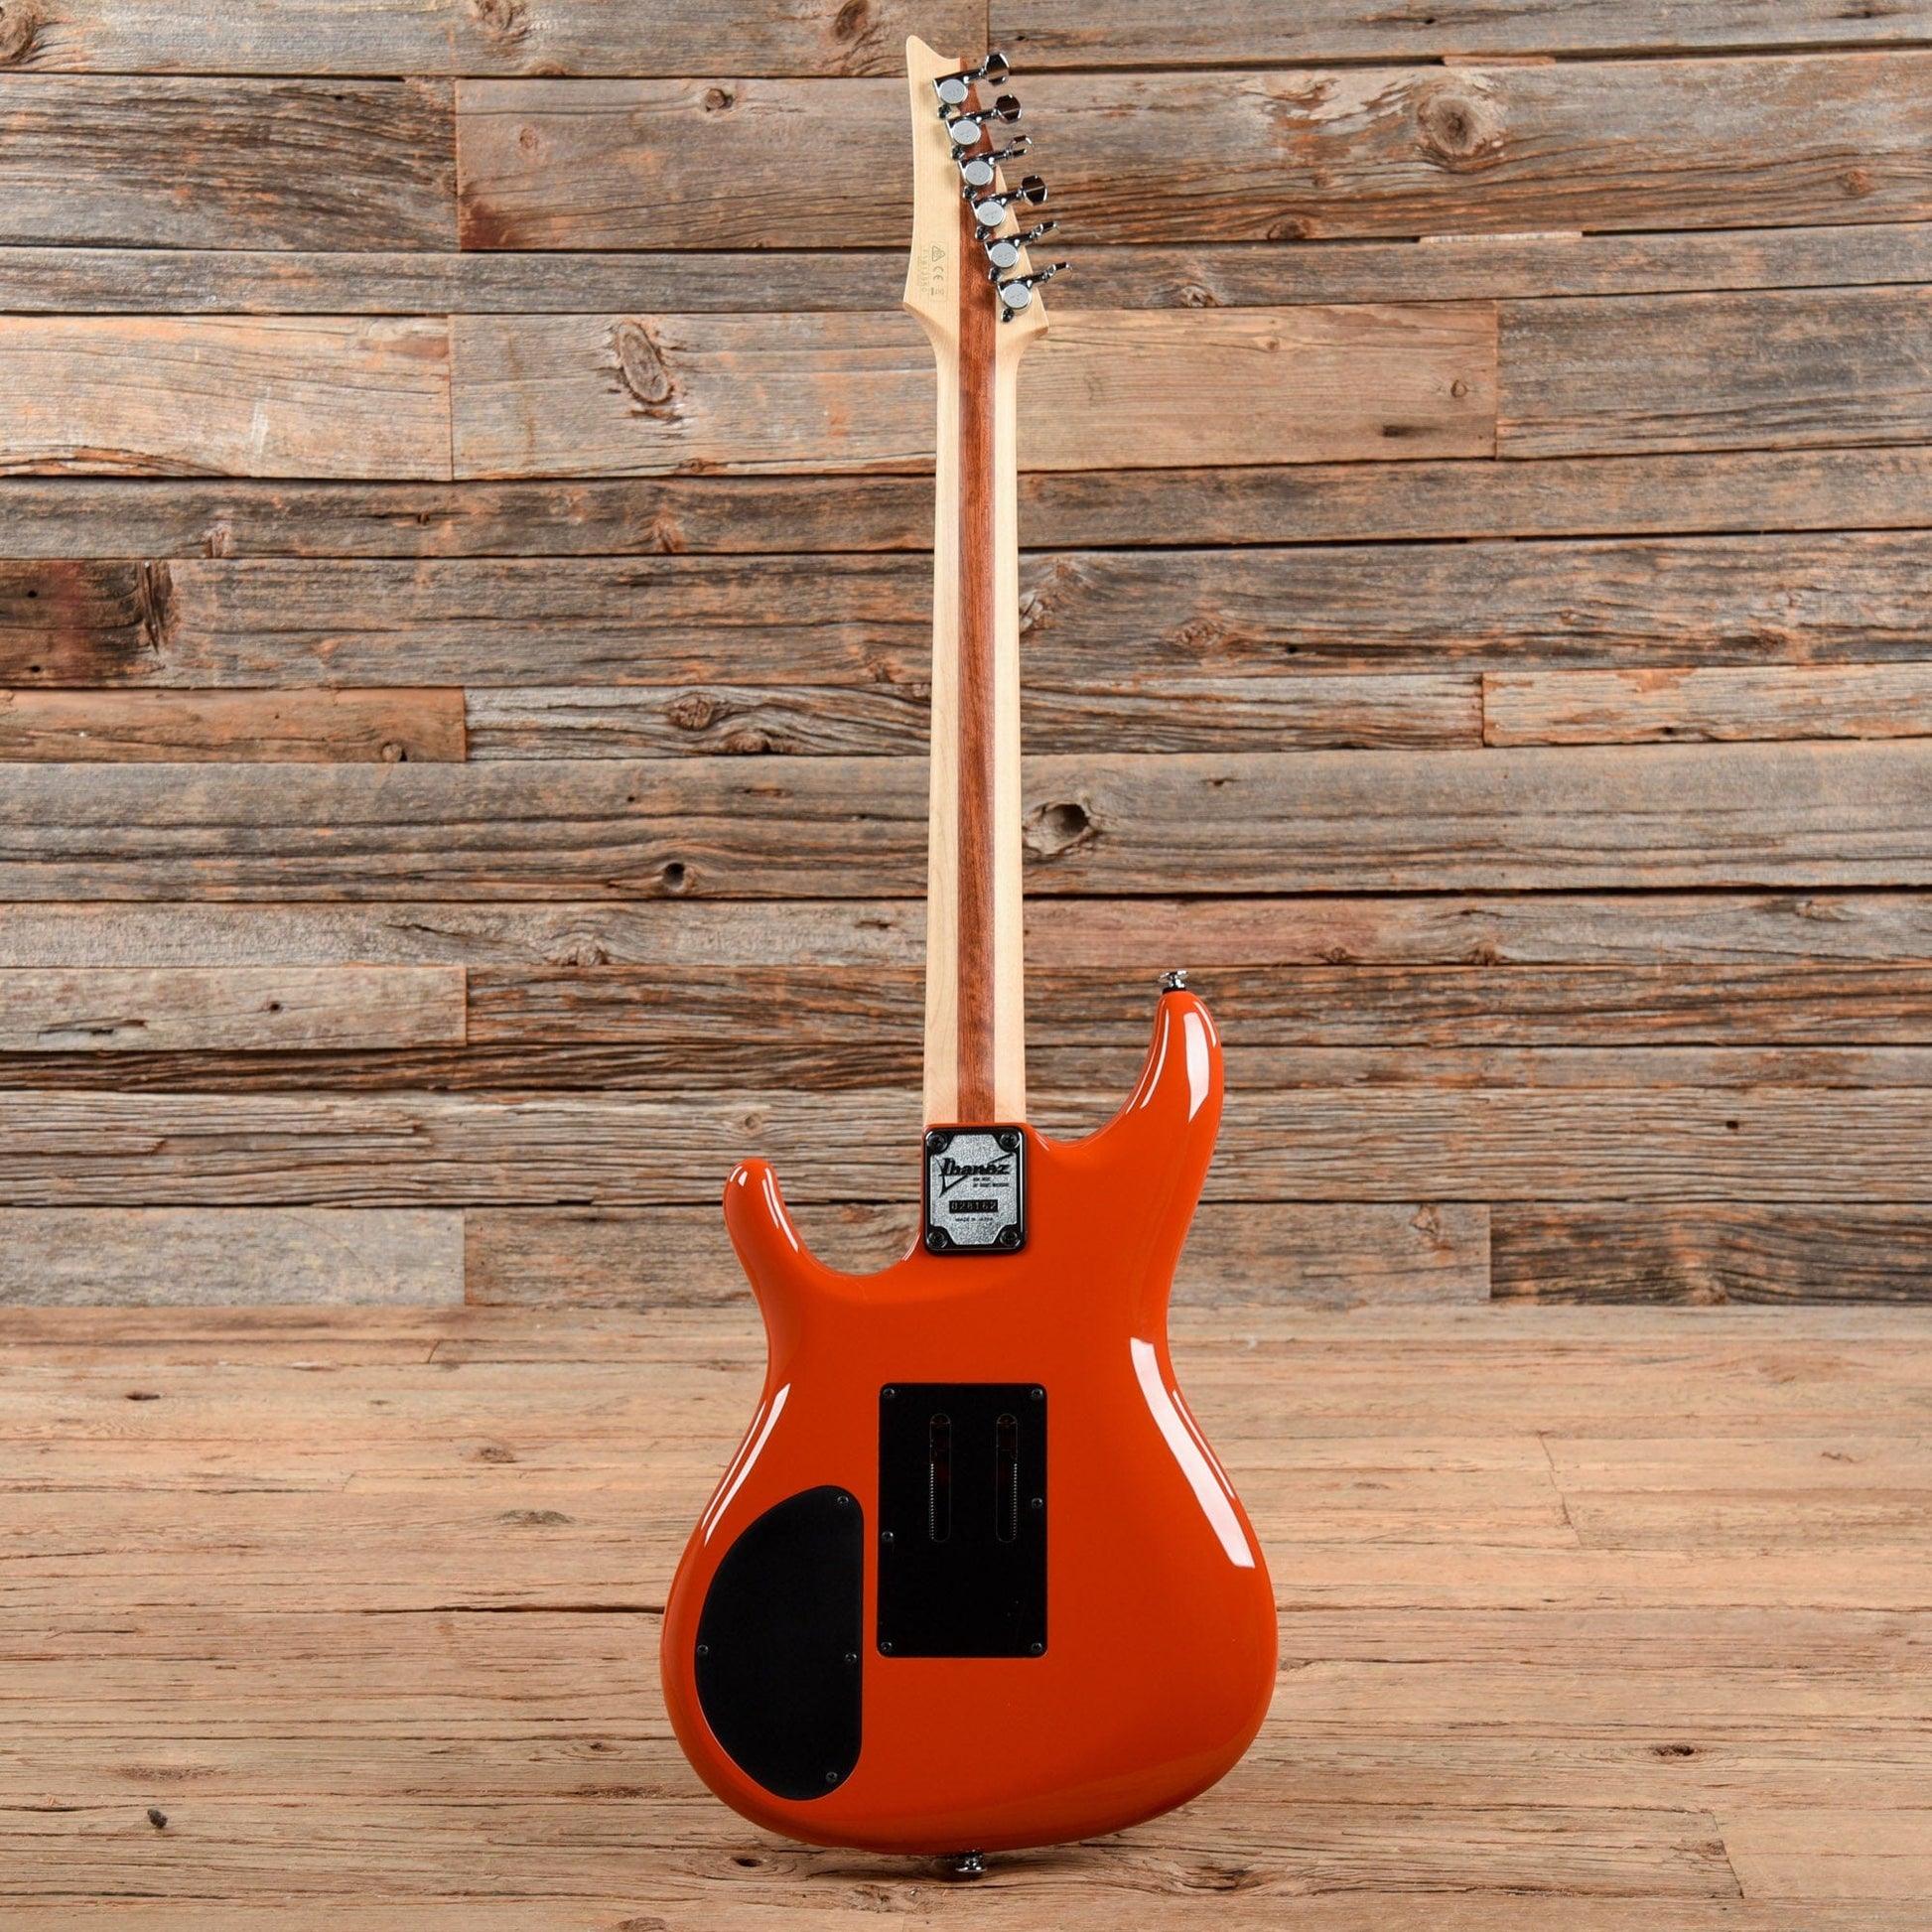 Ibanez JS2410 Joe Satriani Signature Muscle Car Orange 2018 Electric Guitars / Solid Body